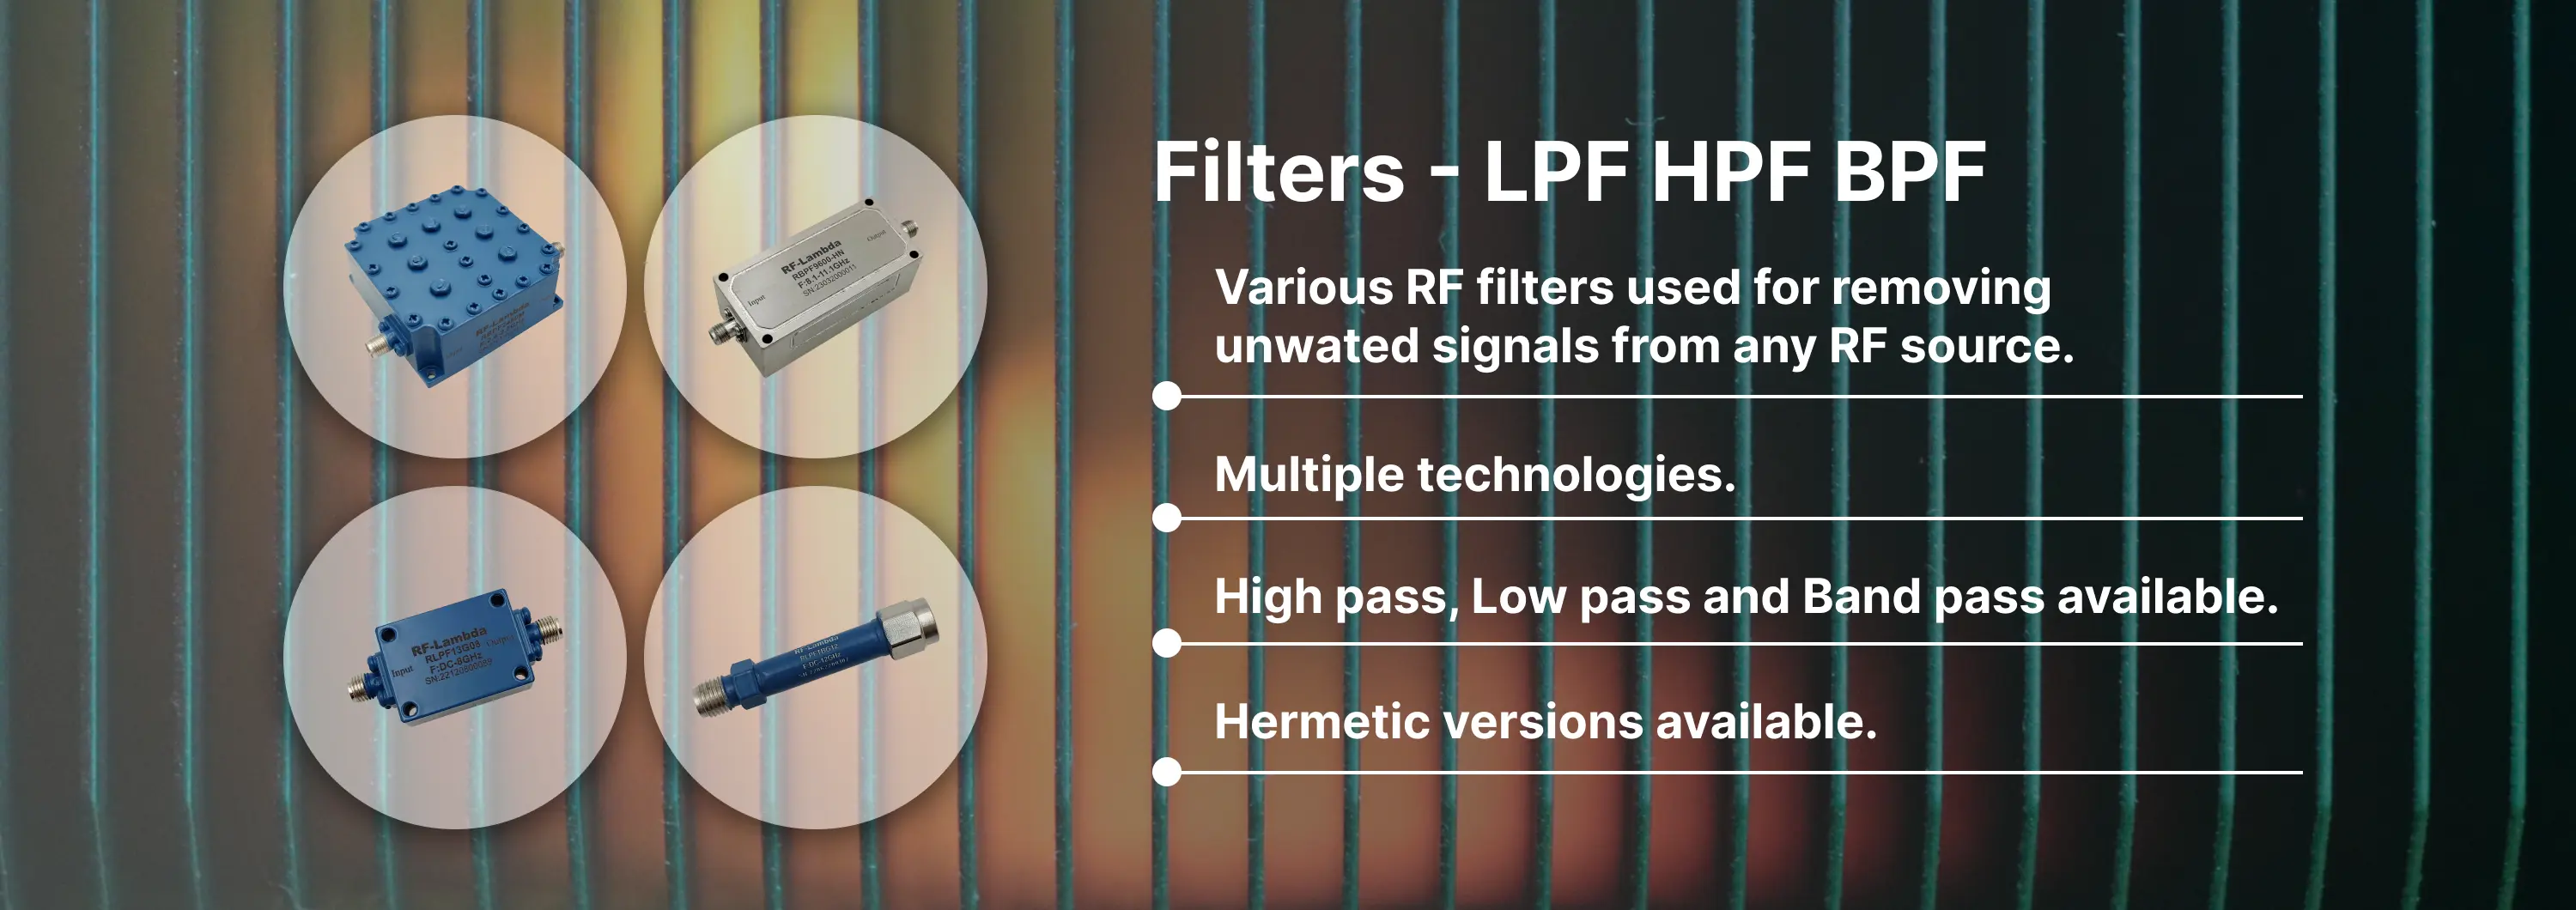 Filters - LPF HPF BPF Banner